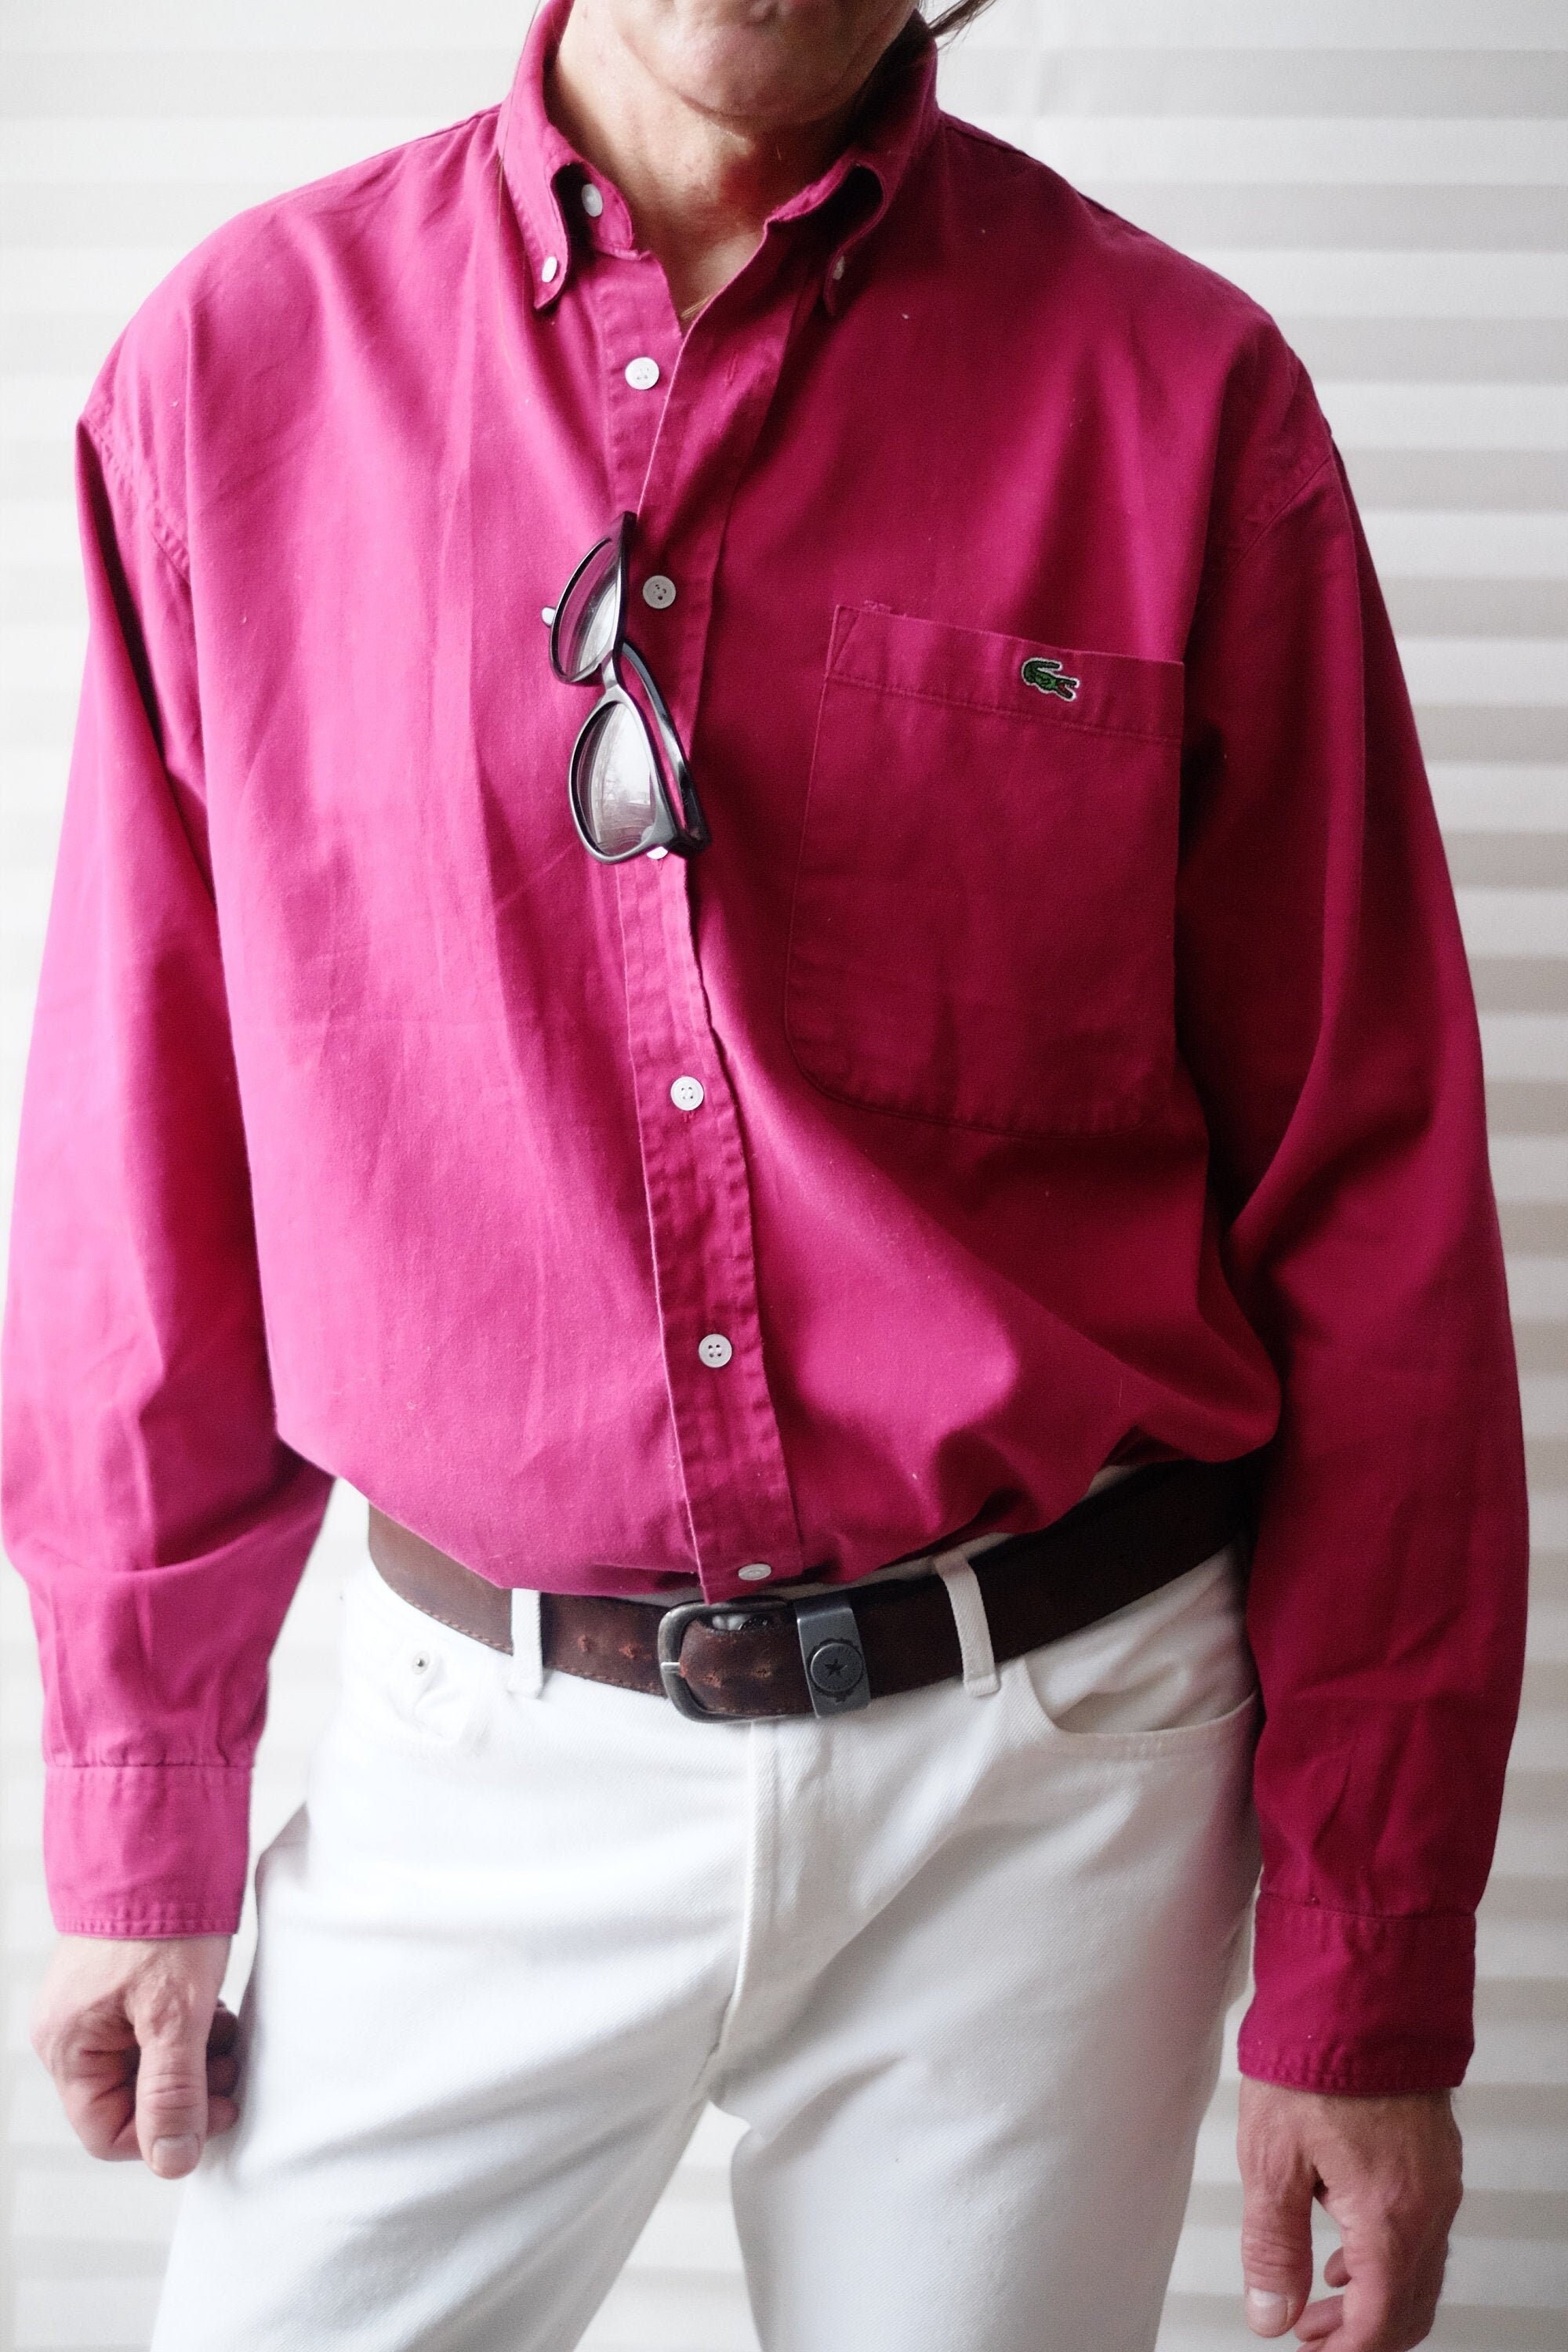 Ropa Ropa para hombre Camisas y camisetas Polos Rosa pálido Lacoste Hombre Polo Camisa Slim Fit Manga Corta Camisa de Golf Rosa Hombre Chemise Camiseta Talla Mediana 